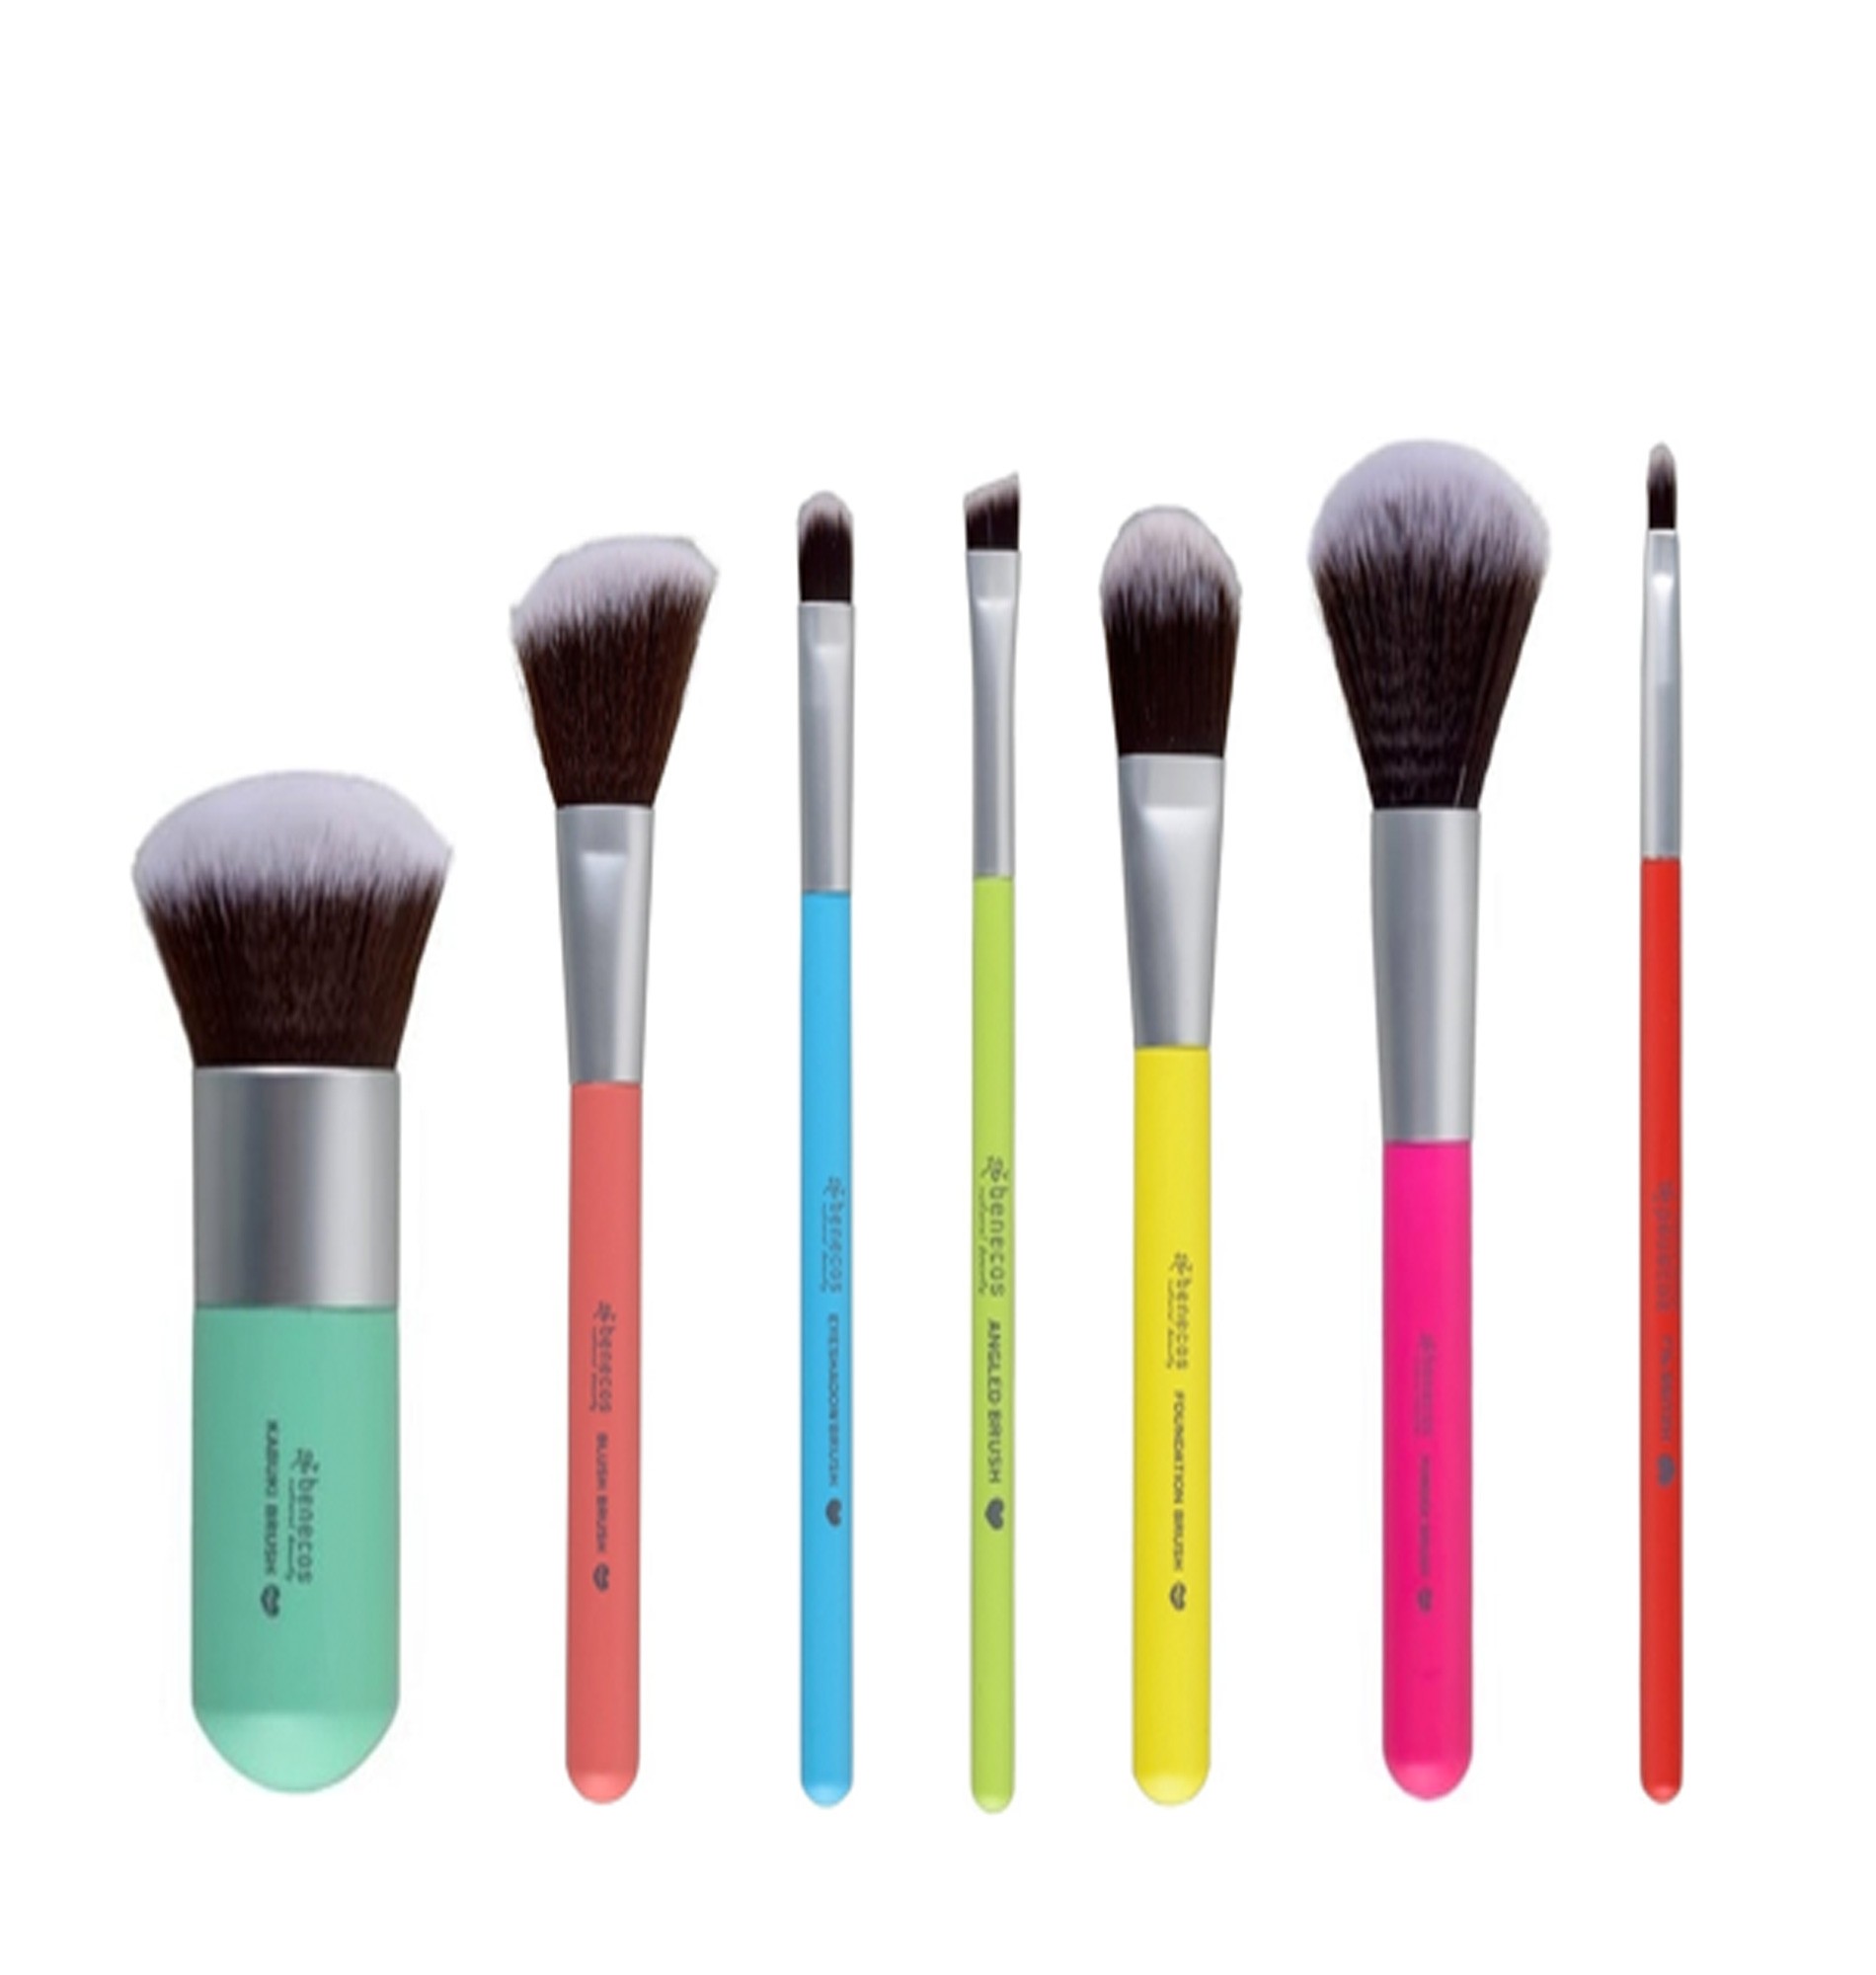 Benecos Vegan Make Up Complete Brushes Set 